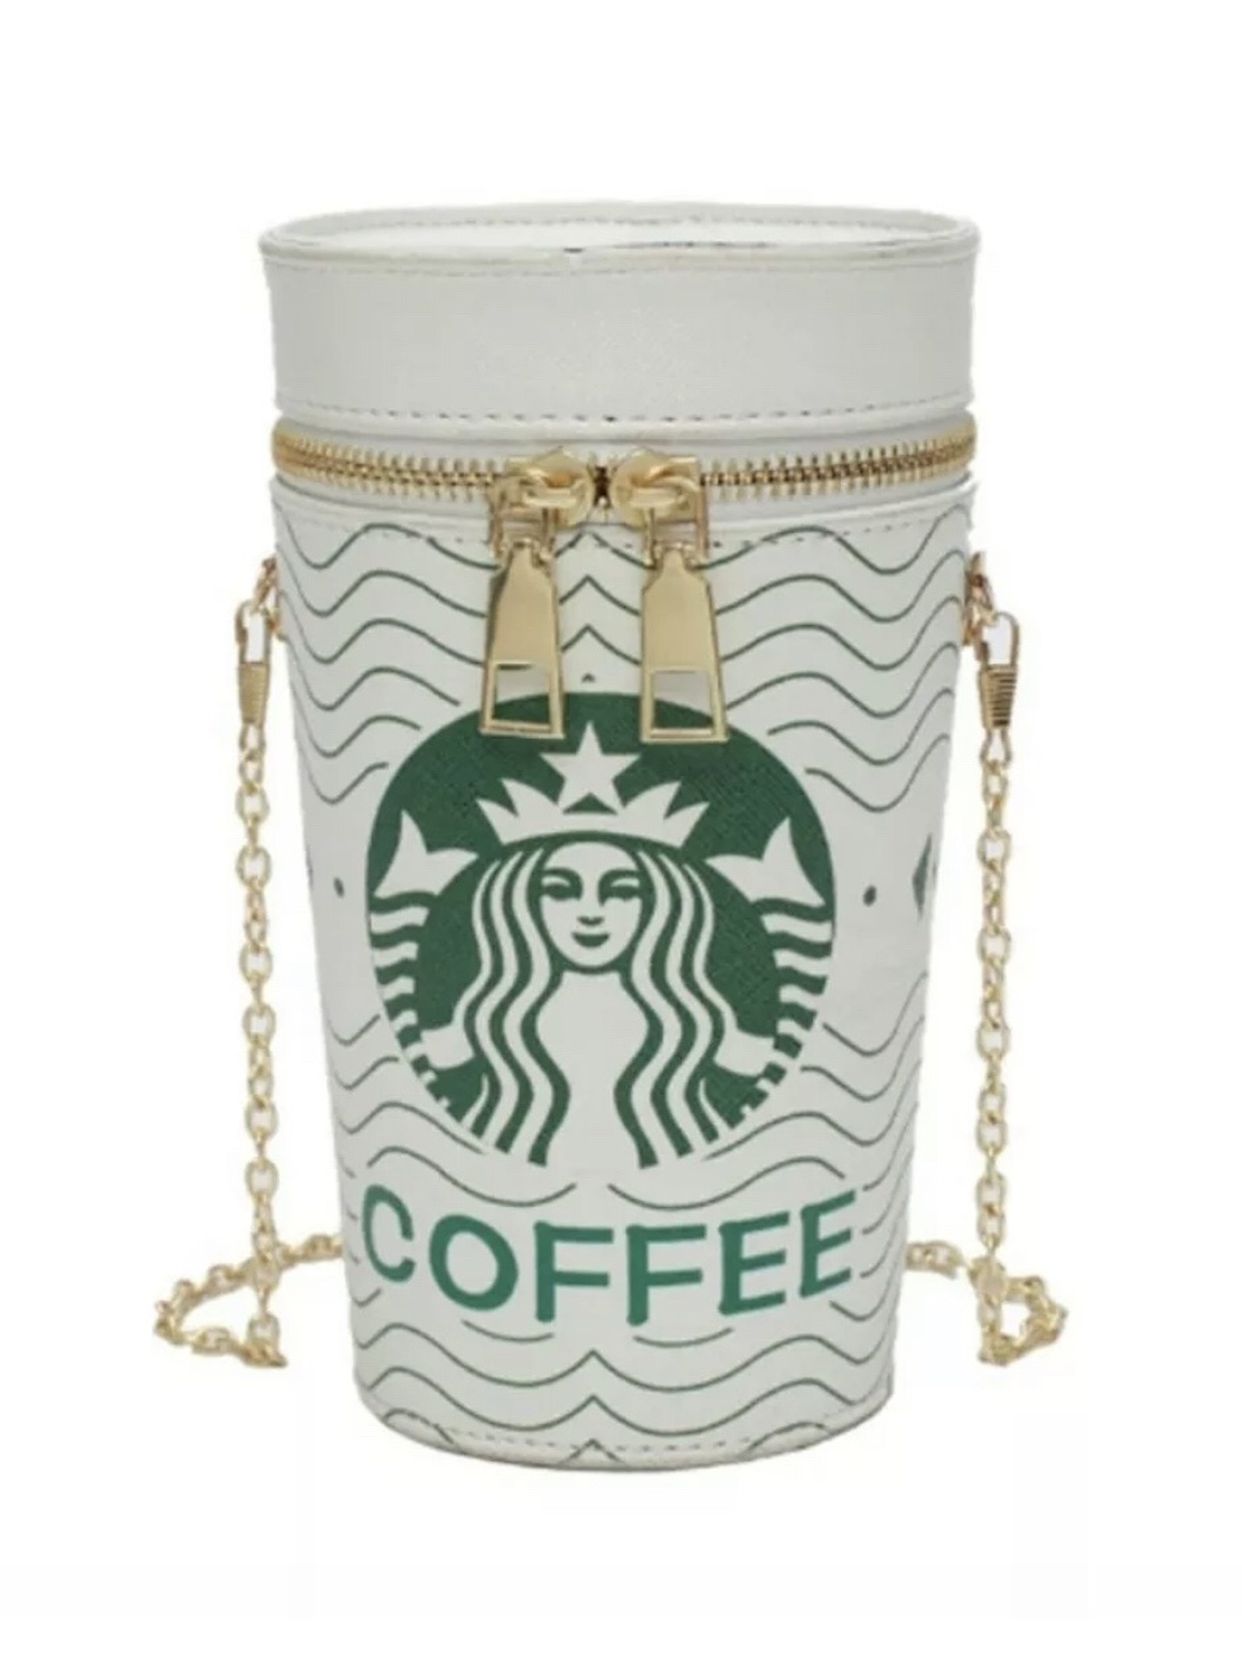 Starbucks Inspired Bucket Cup Bag Purse